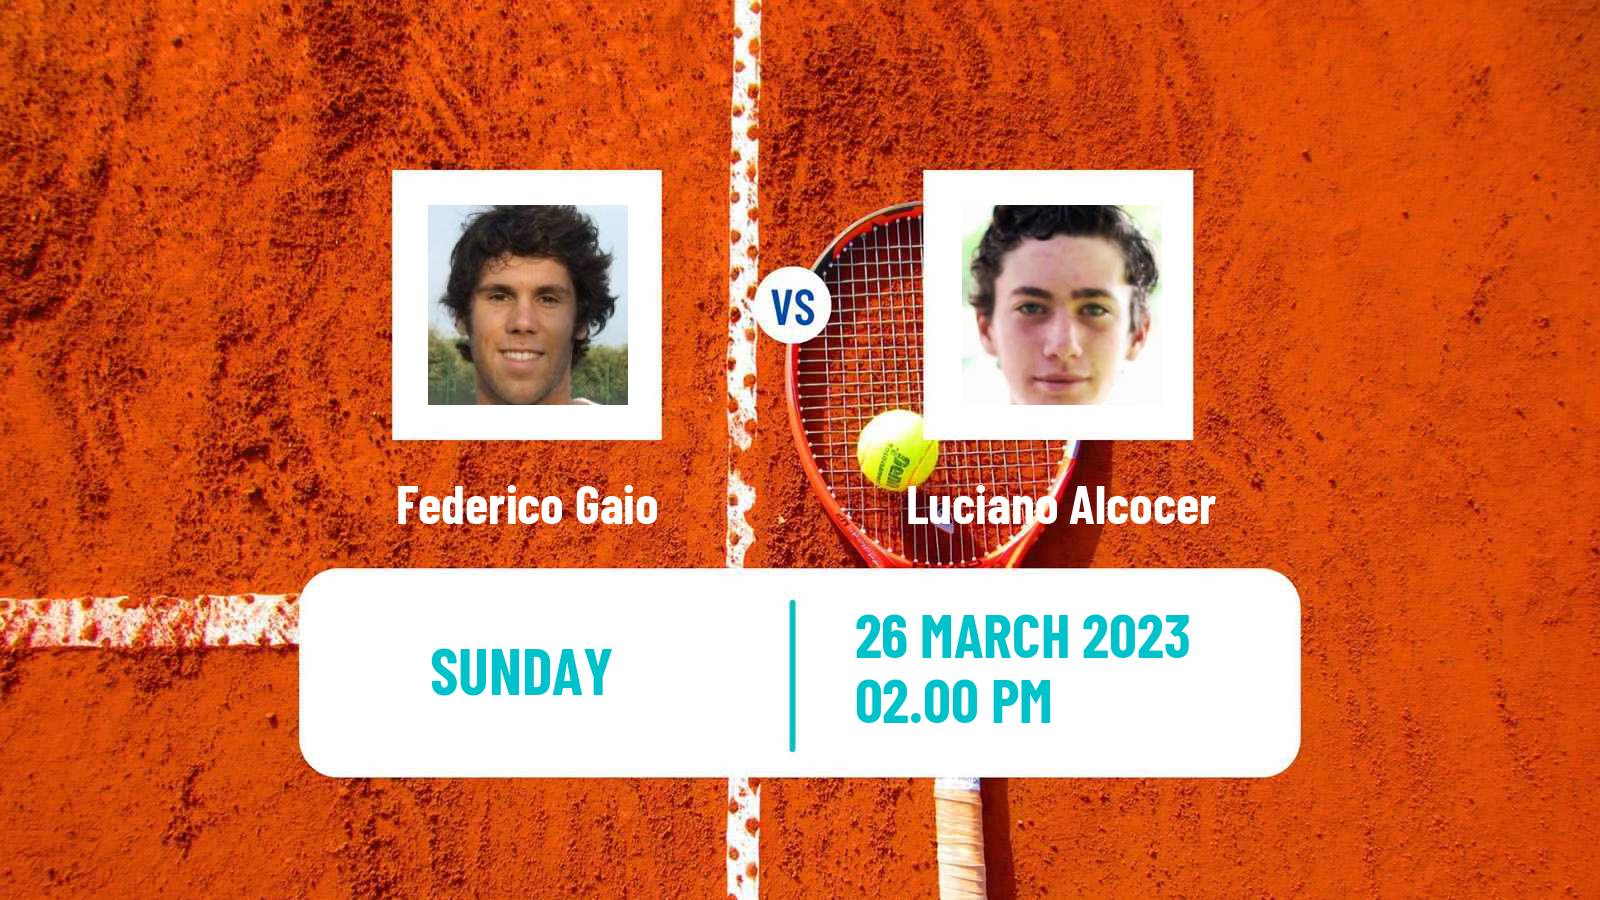 Tennis ATP Challenger Federico Gaio - Luciano Alcocer